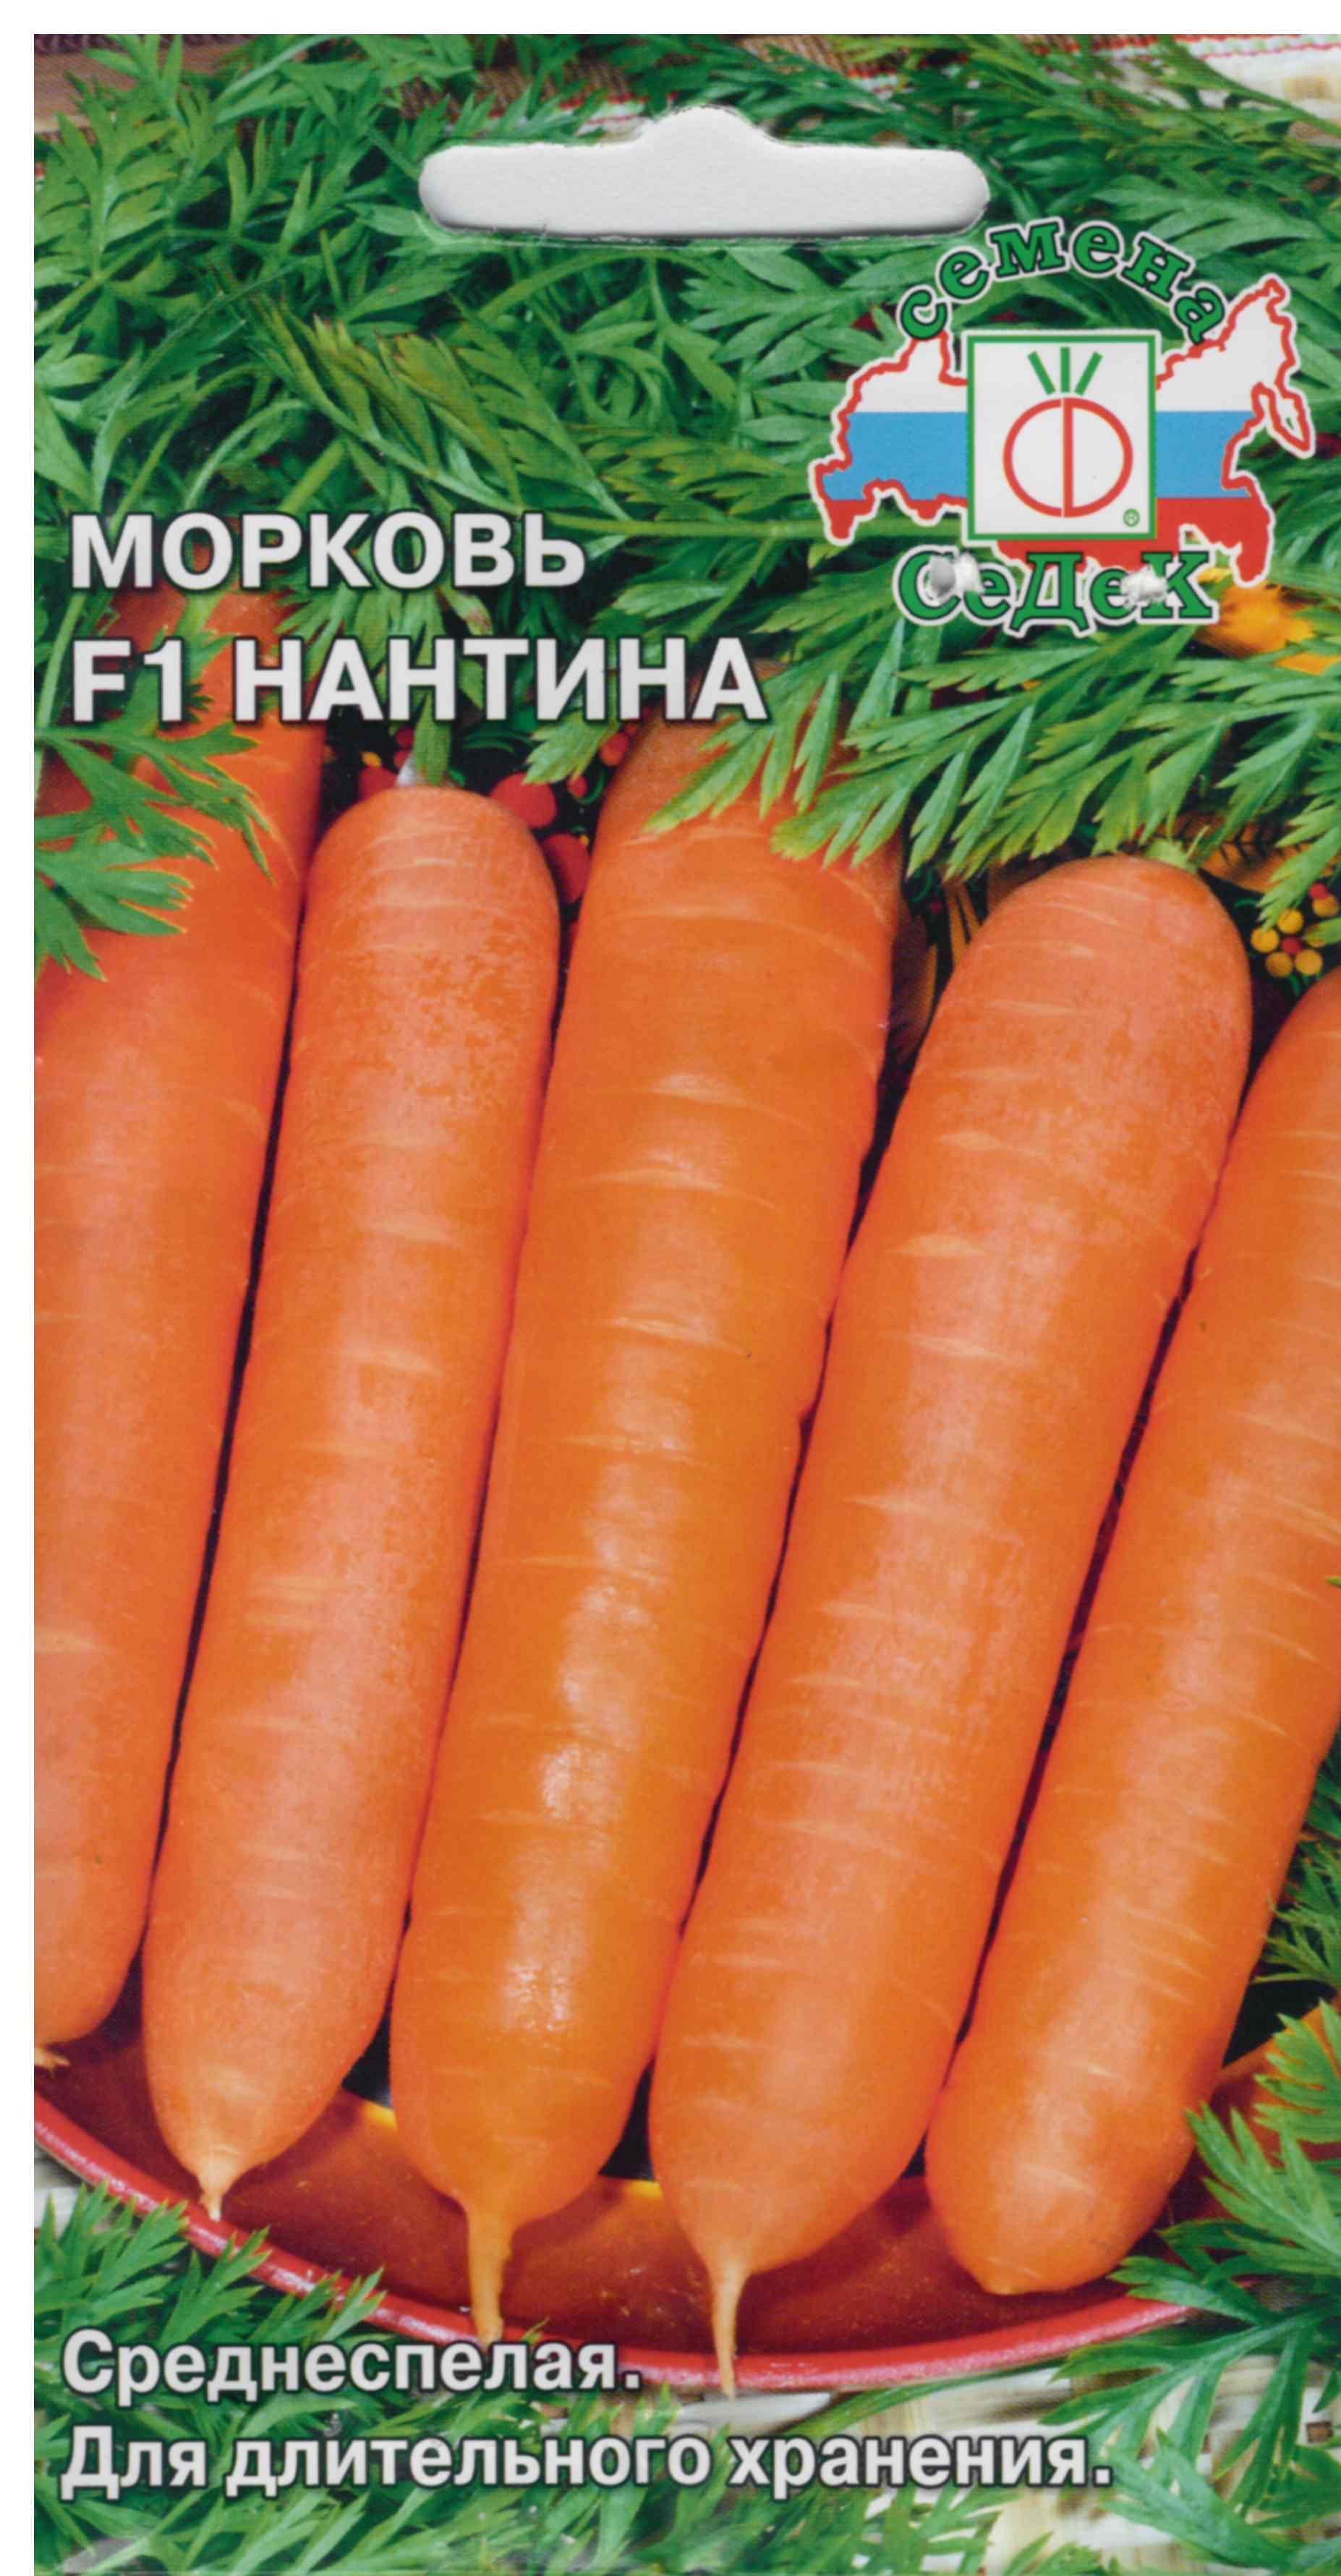 Морковь Нантина F1